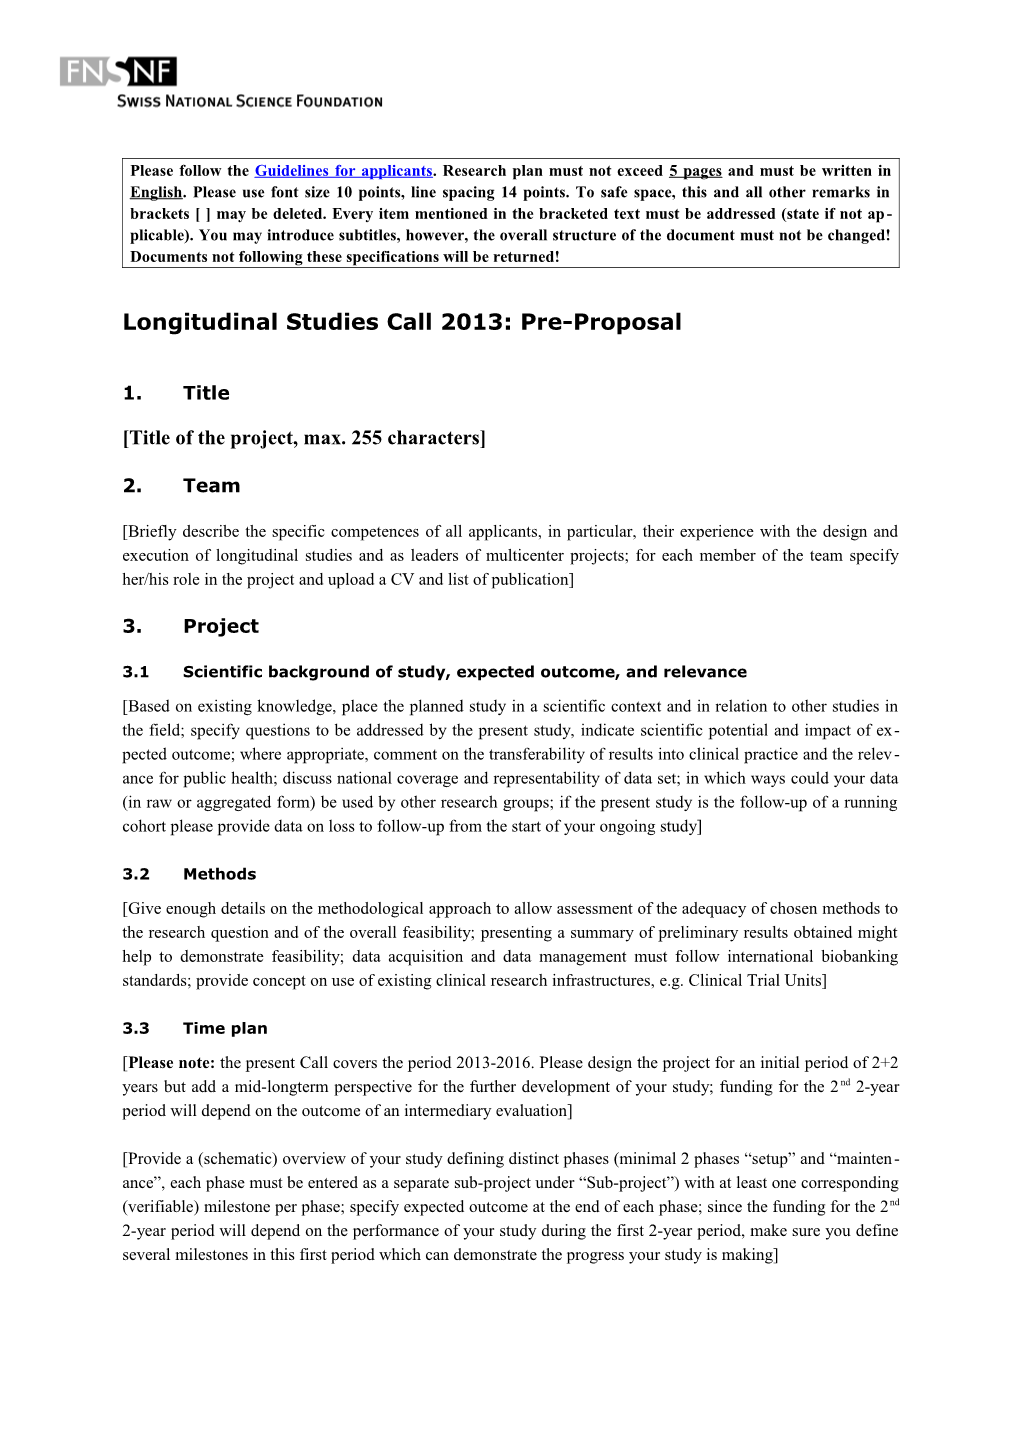 Longitudinal Studies Call 2013: Pre-Proposal